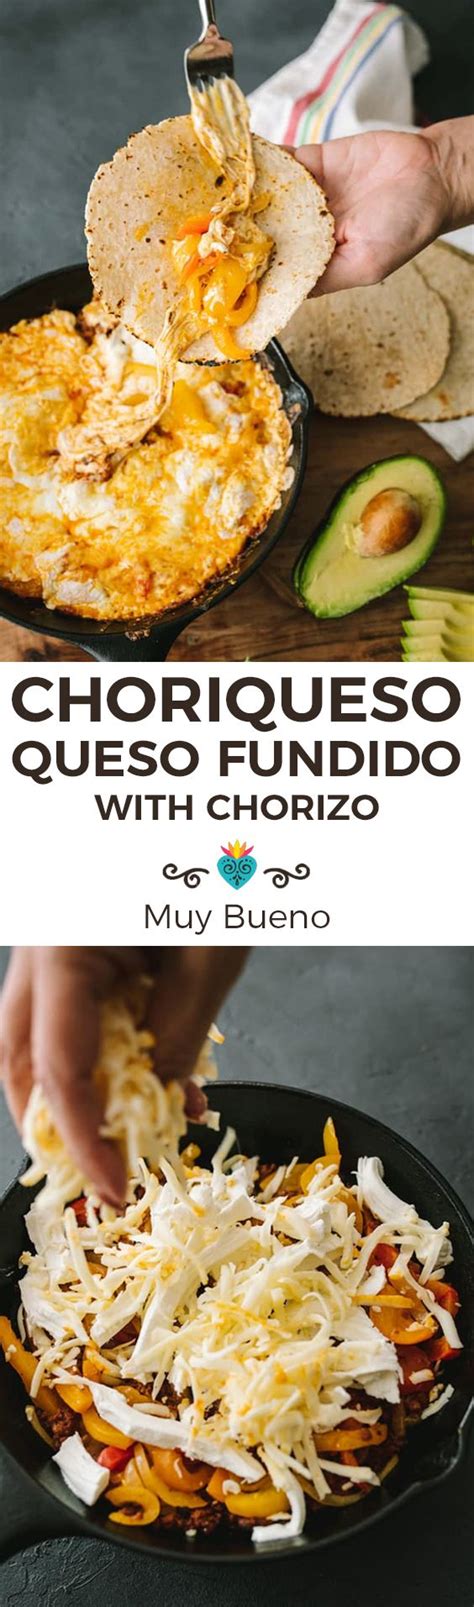 Choriqueso Queso Fundido With Chorizo Recipe Mexican Food Recipes